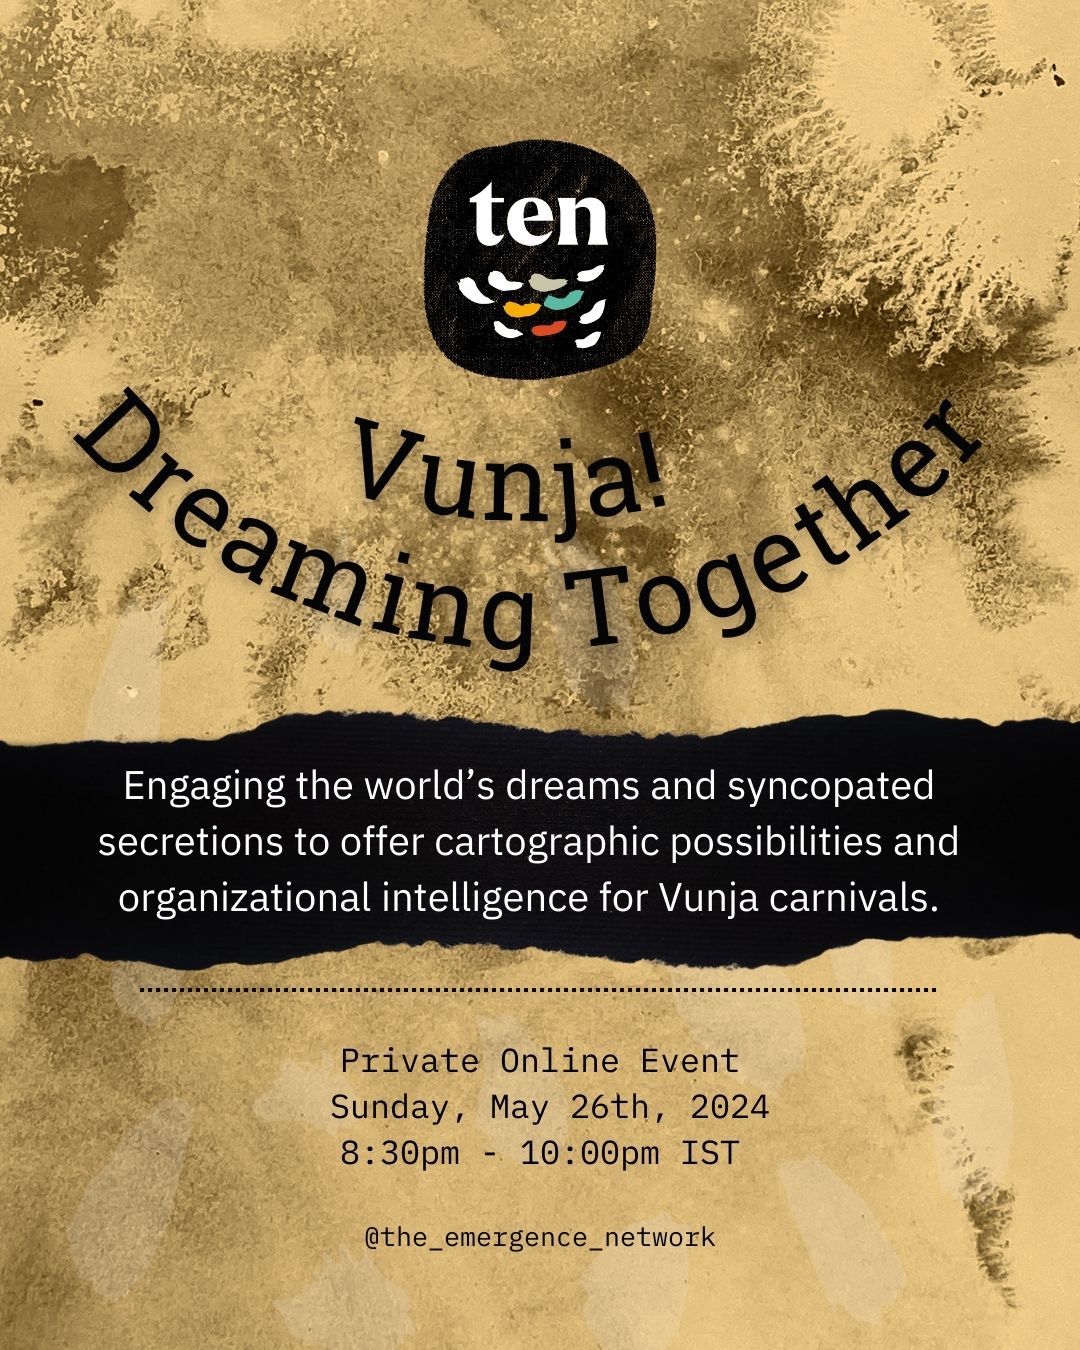 Vunja! Dreaming Together Communal Sensing Series - Session IV